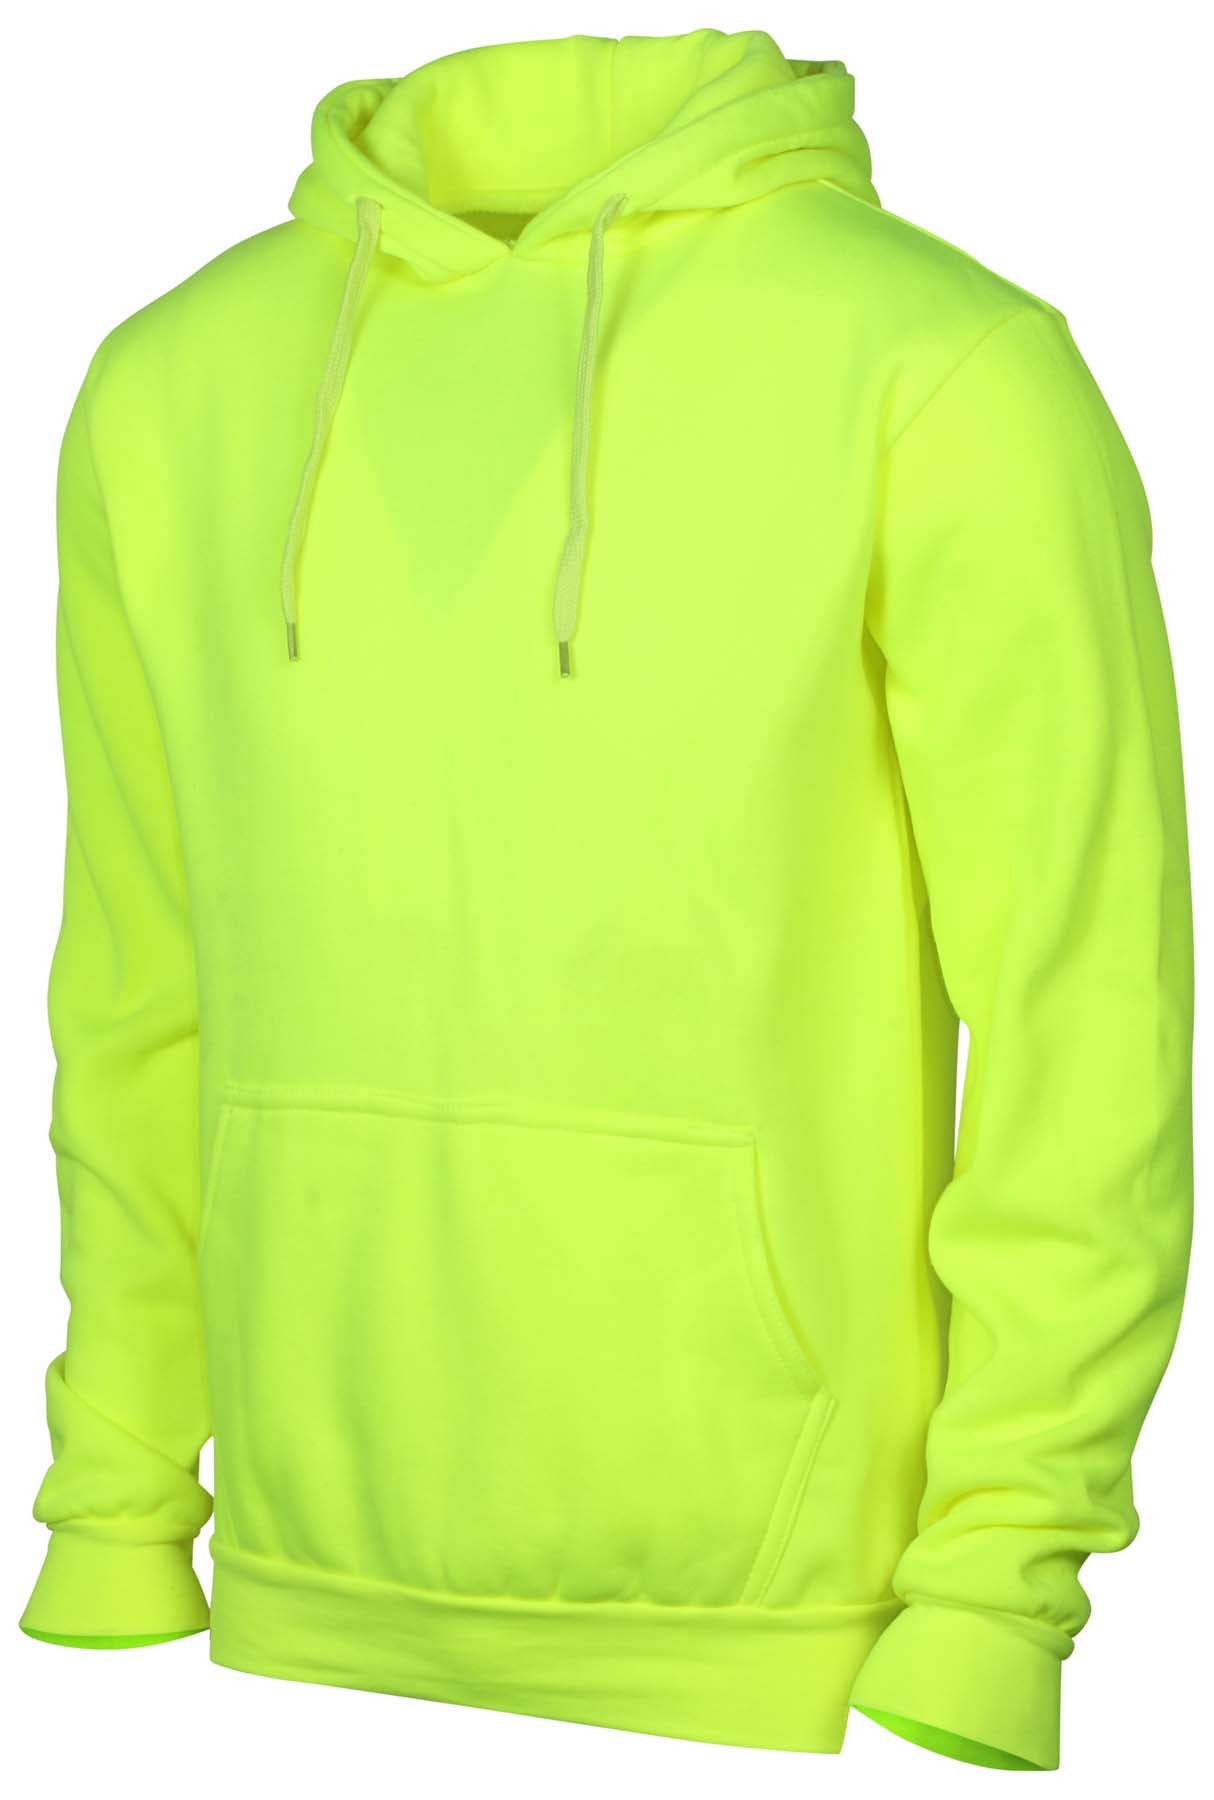 9 Crowns Men's Bright Neon Pullover Sweater Hoodie | eBay